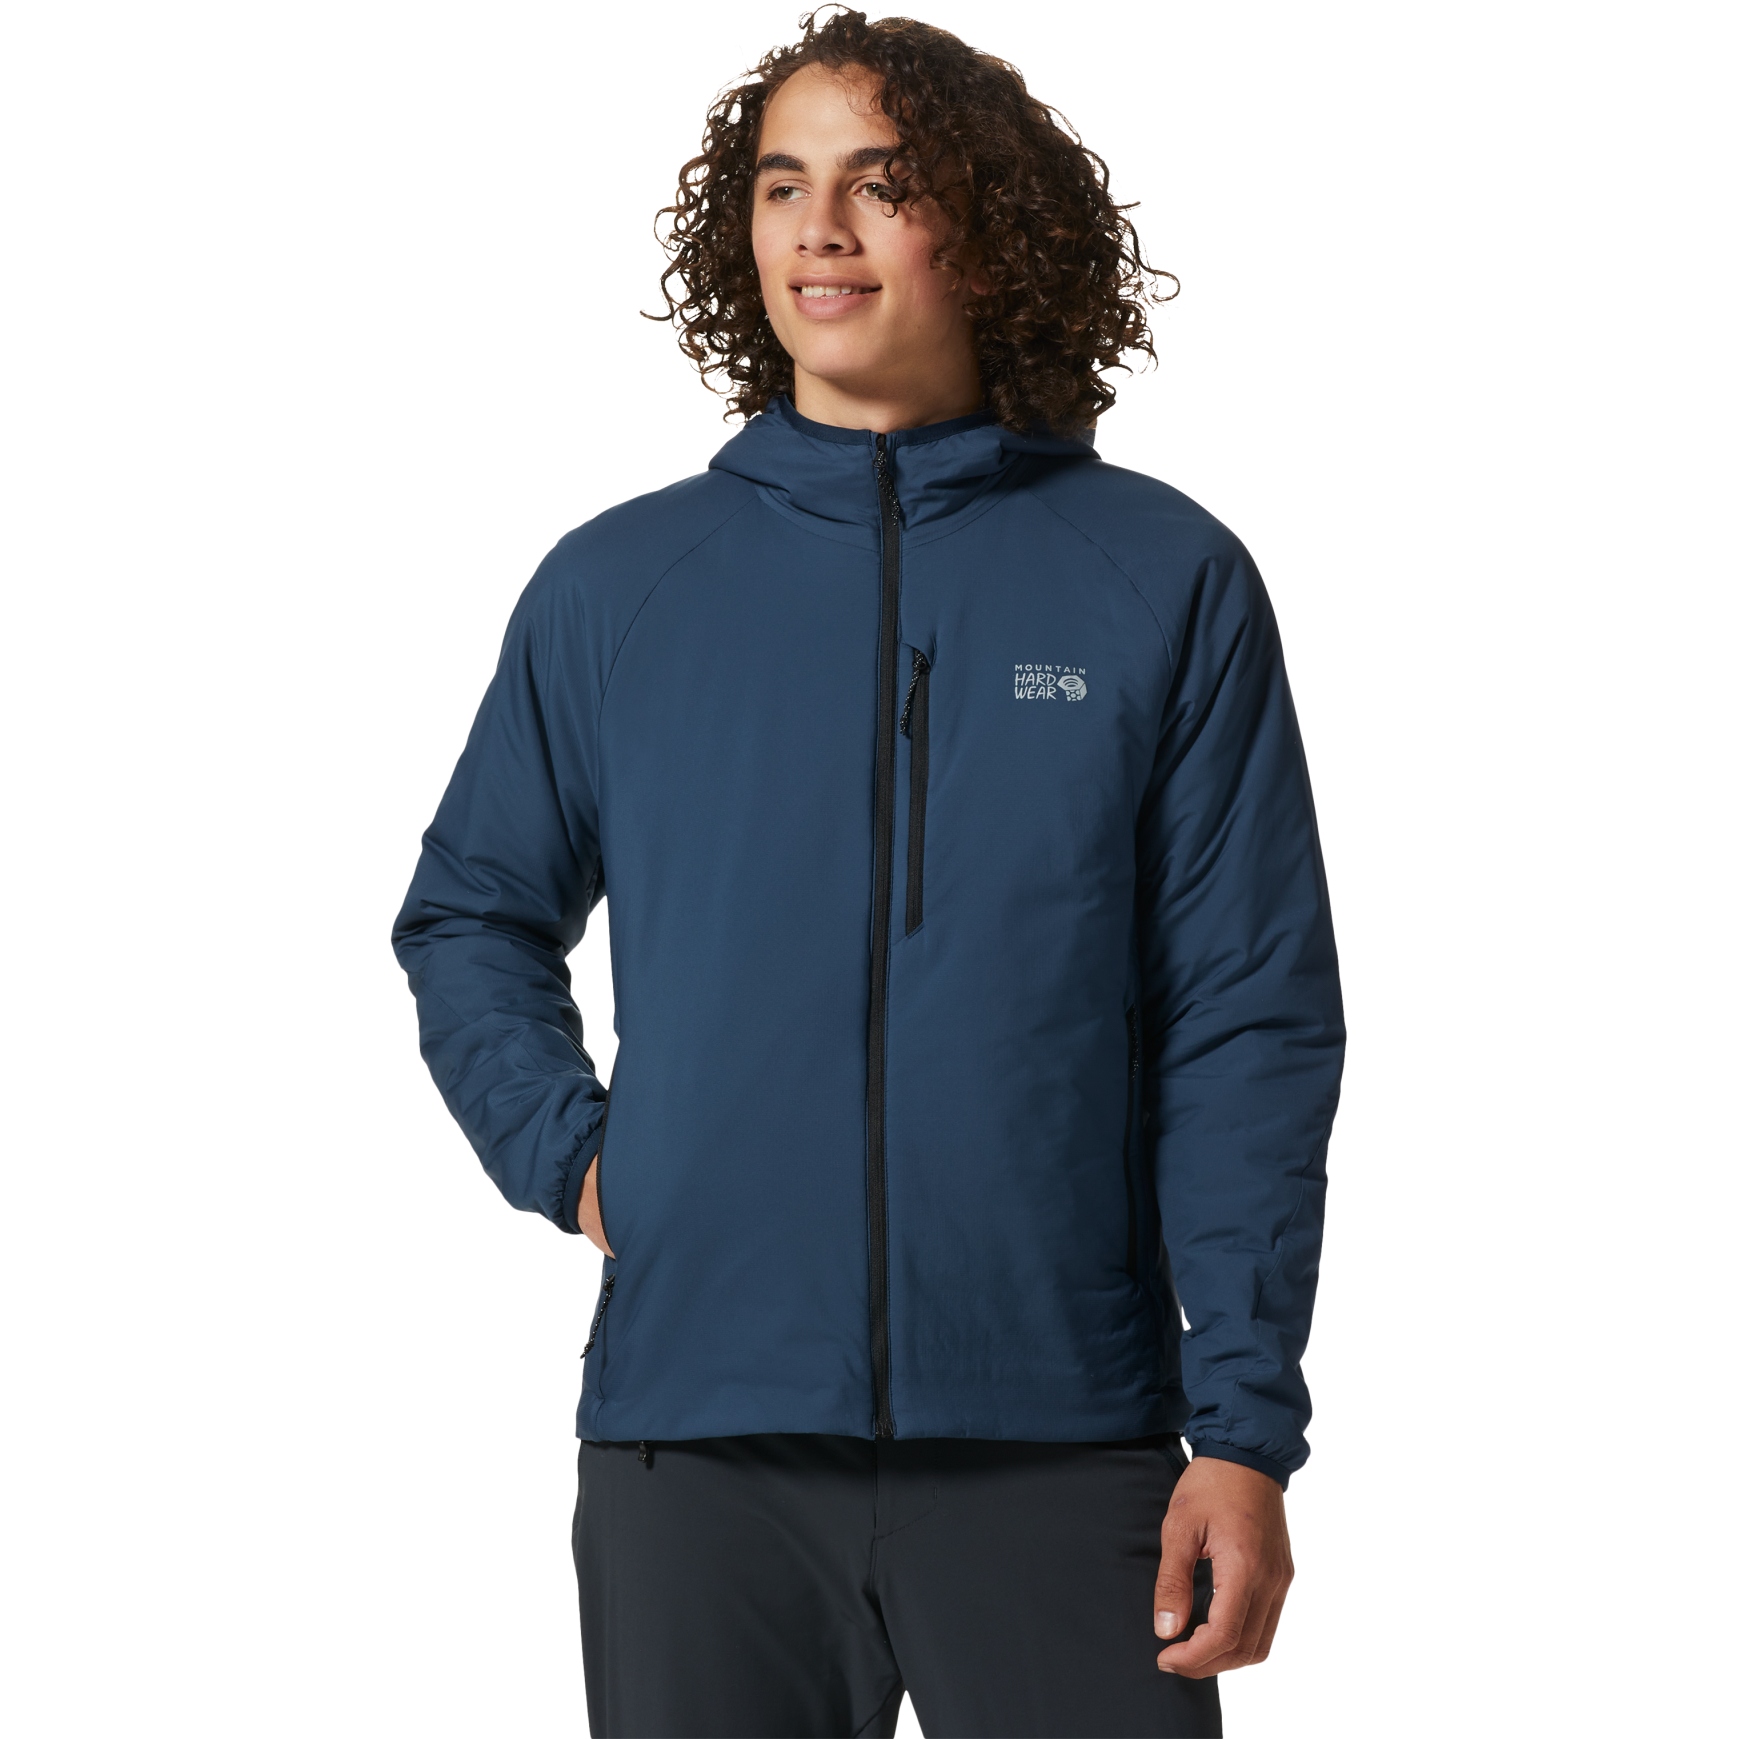 Productfoto van Mountain Hardwear Kor Strata Hooded Jacket - hardwear navy